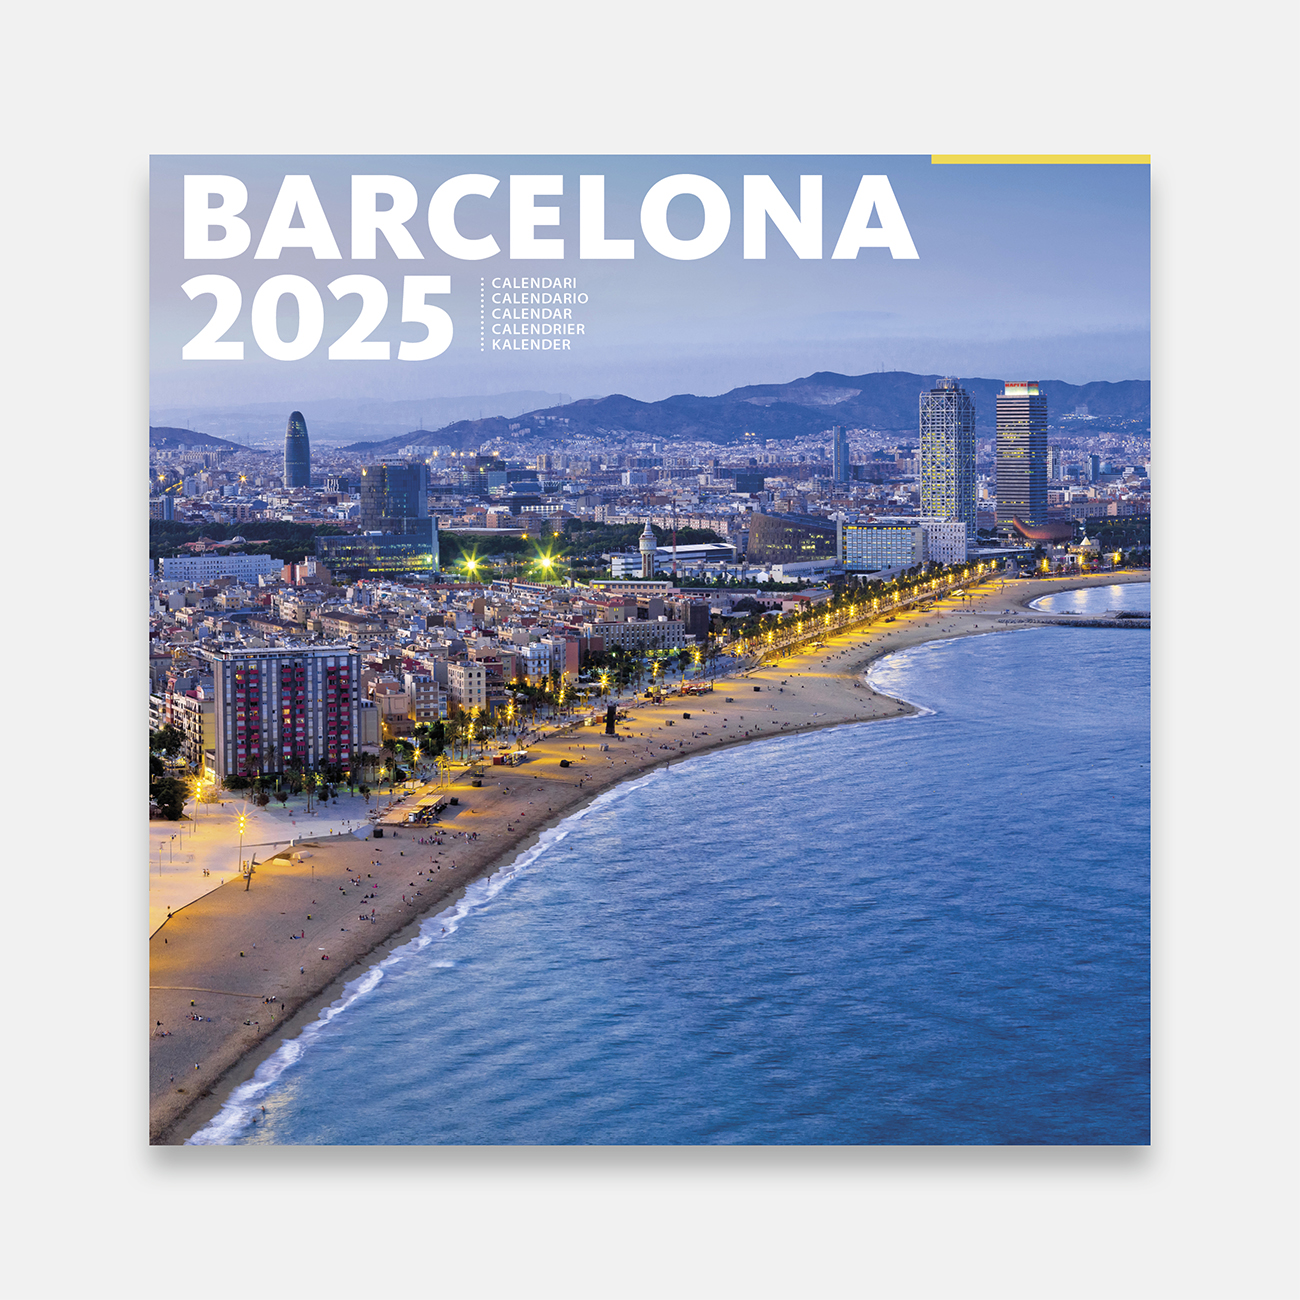 Calendrier 2025 Barcelone 25b1 calendario pared 2025 barcelona